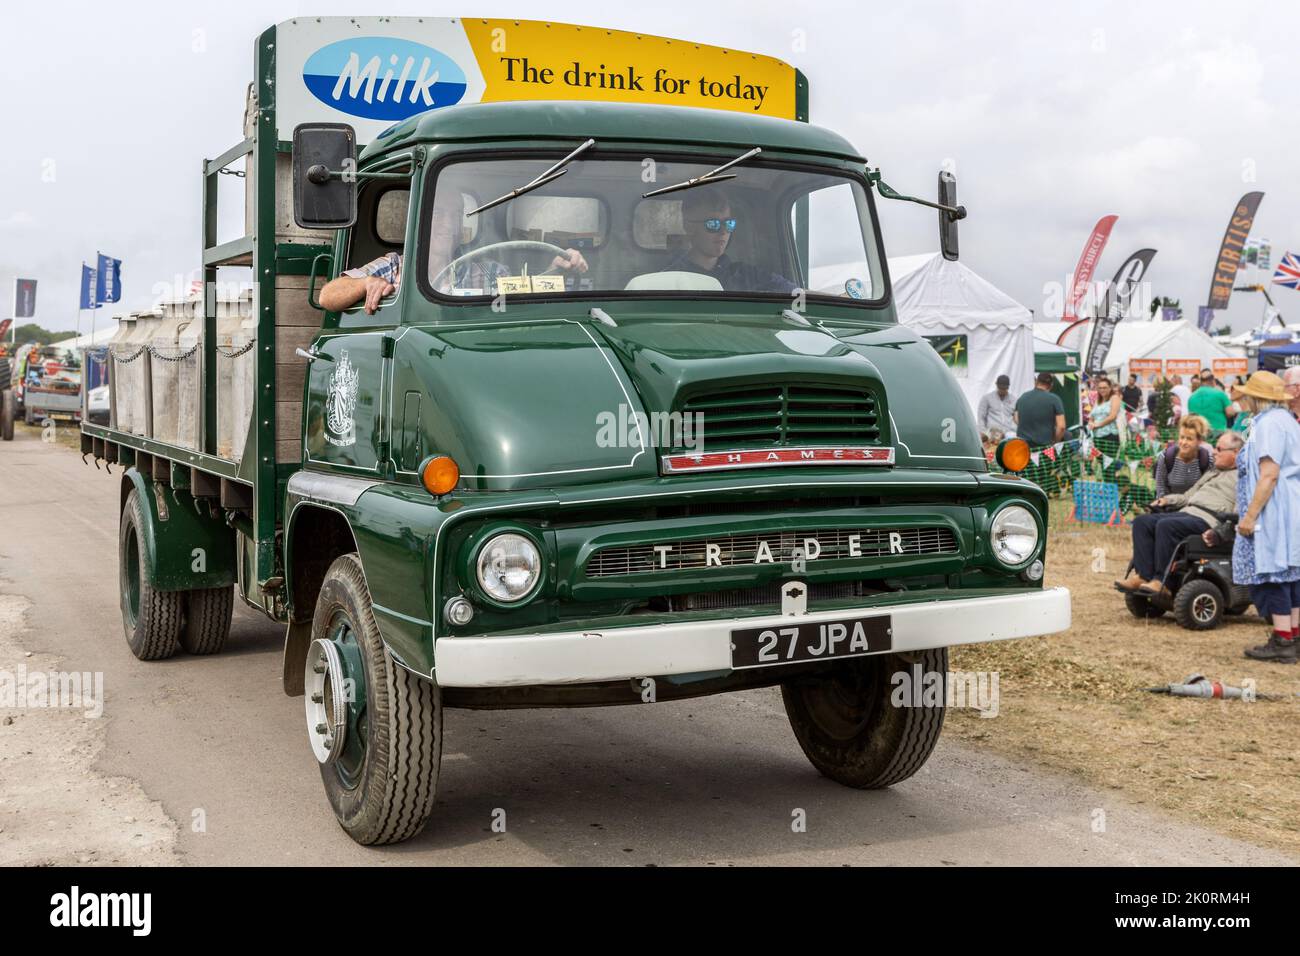 27 JPA, Ford Thames Trader, milk lorry, Dorset County Show 2022, Dorset, UK Stock Photo